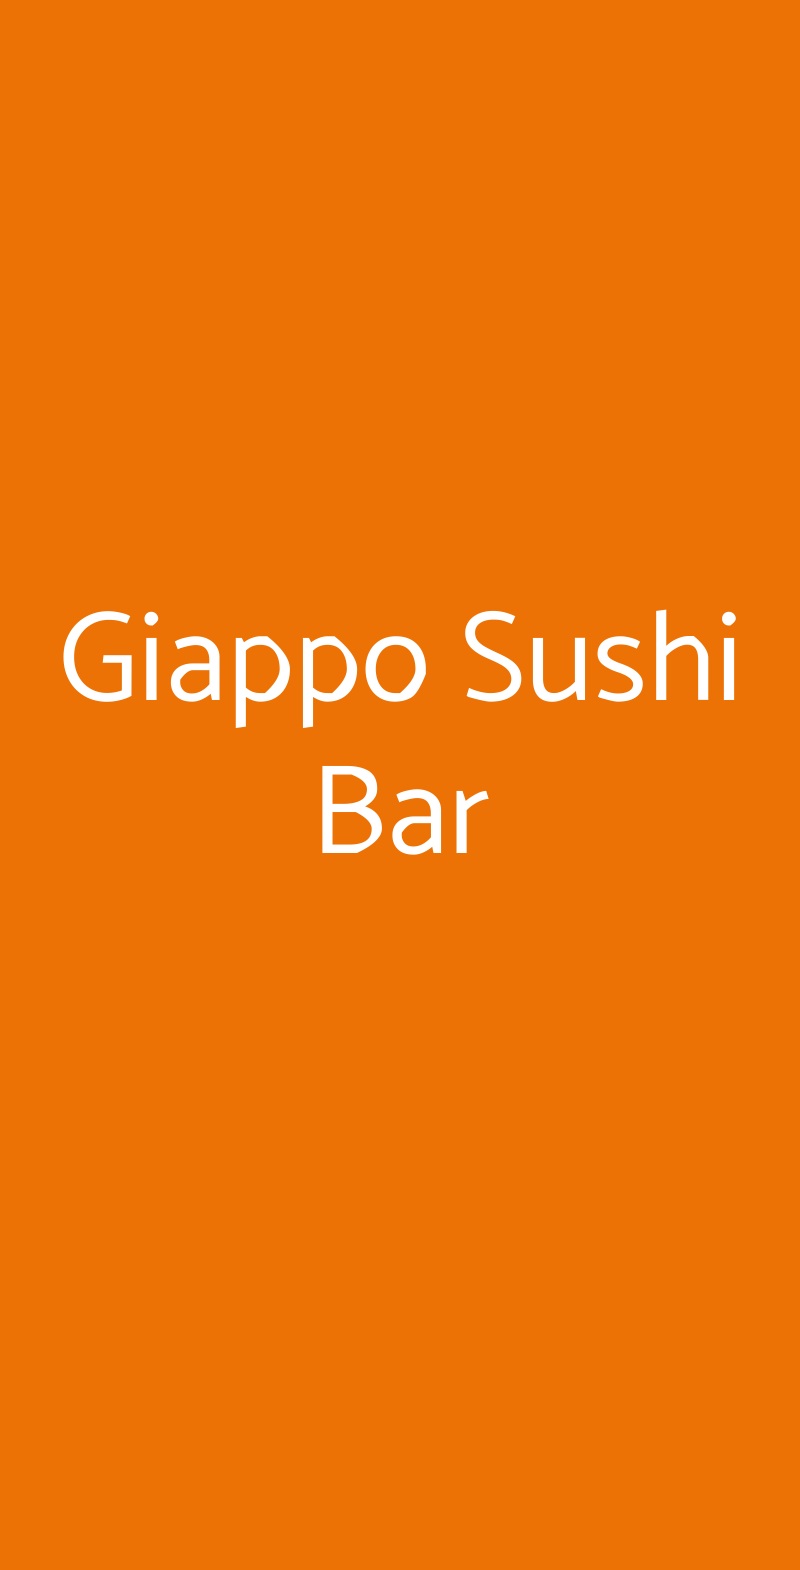 Giappo Sushi Bar Napoli menù 1 pagina